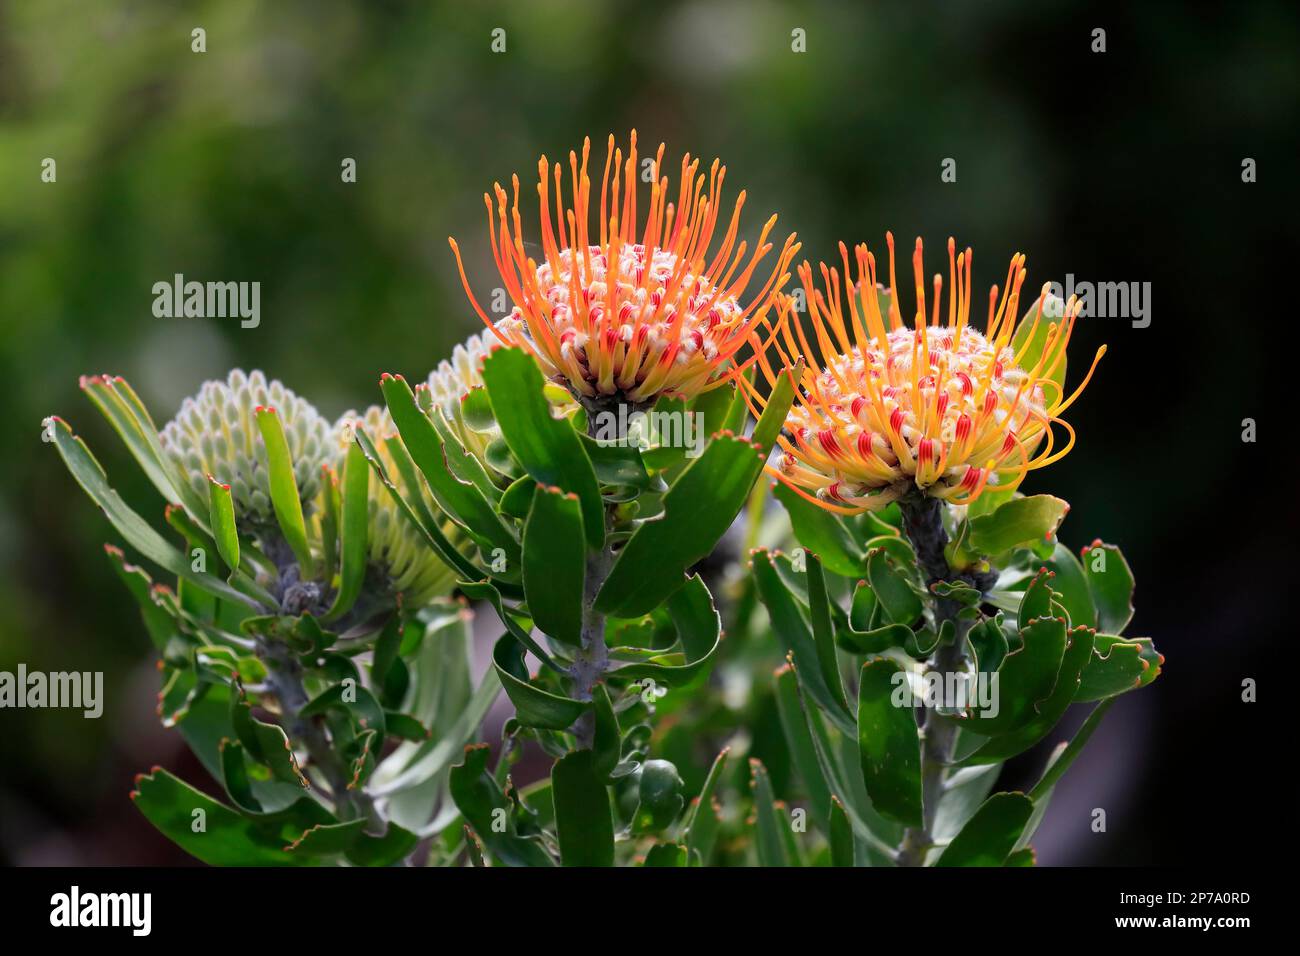 Pincushion Protea (Leucospermum species), Protea, flower, flowering, flower, bushes, plant, Kirstenbosch Botanical Gardens, Cape Town, South Africa Stock Photo